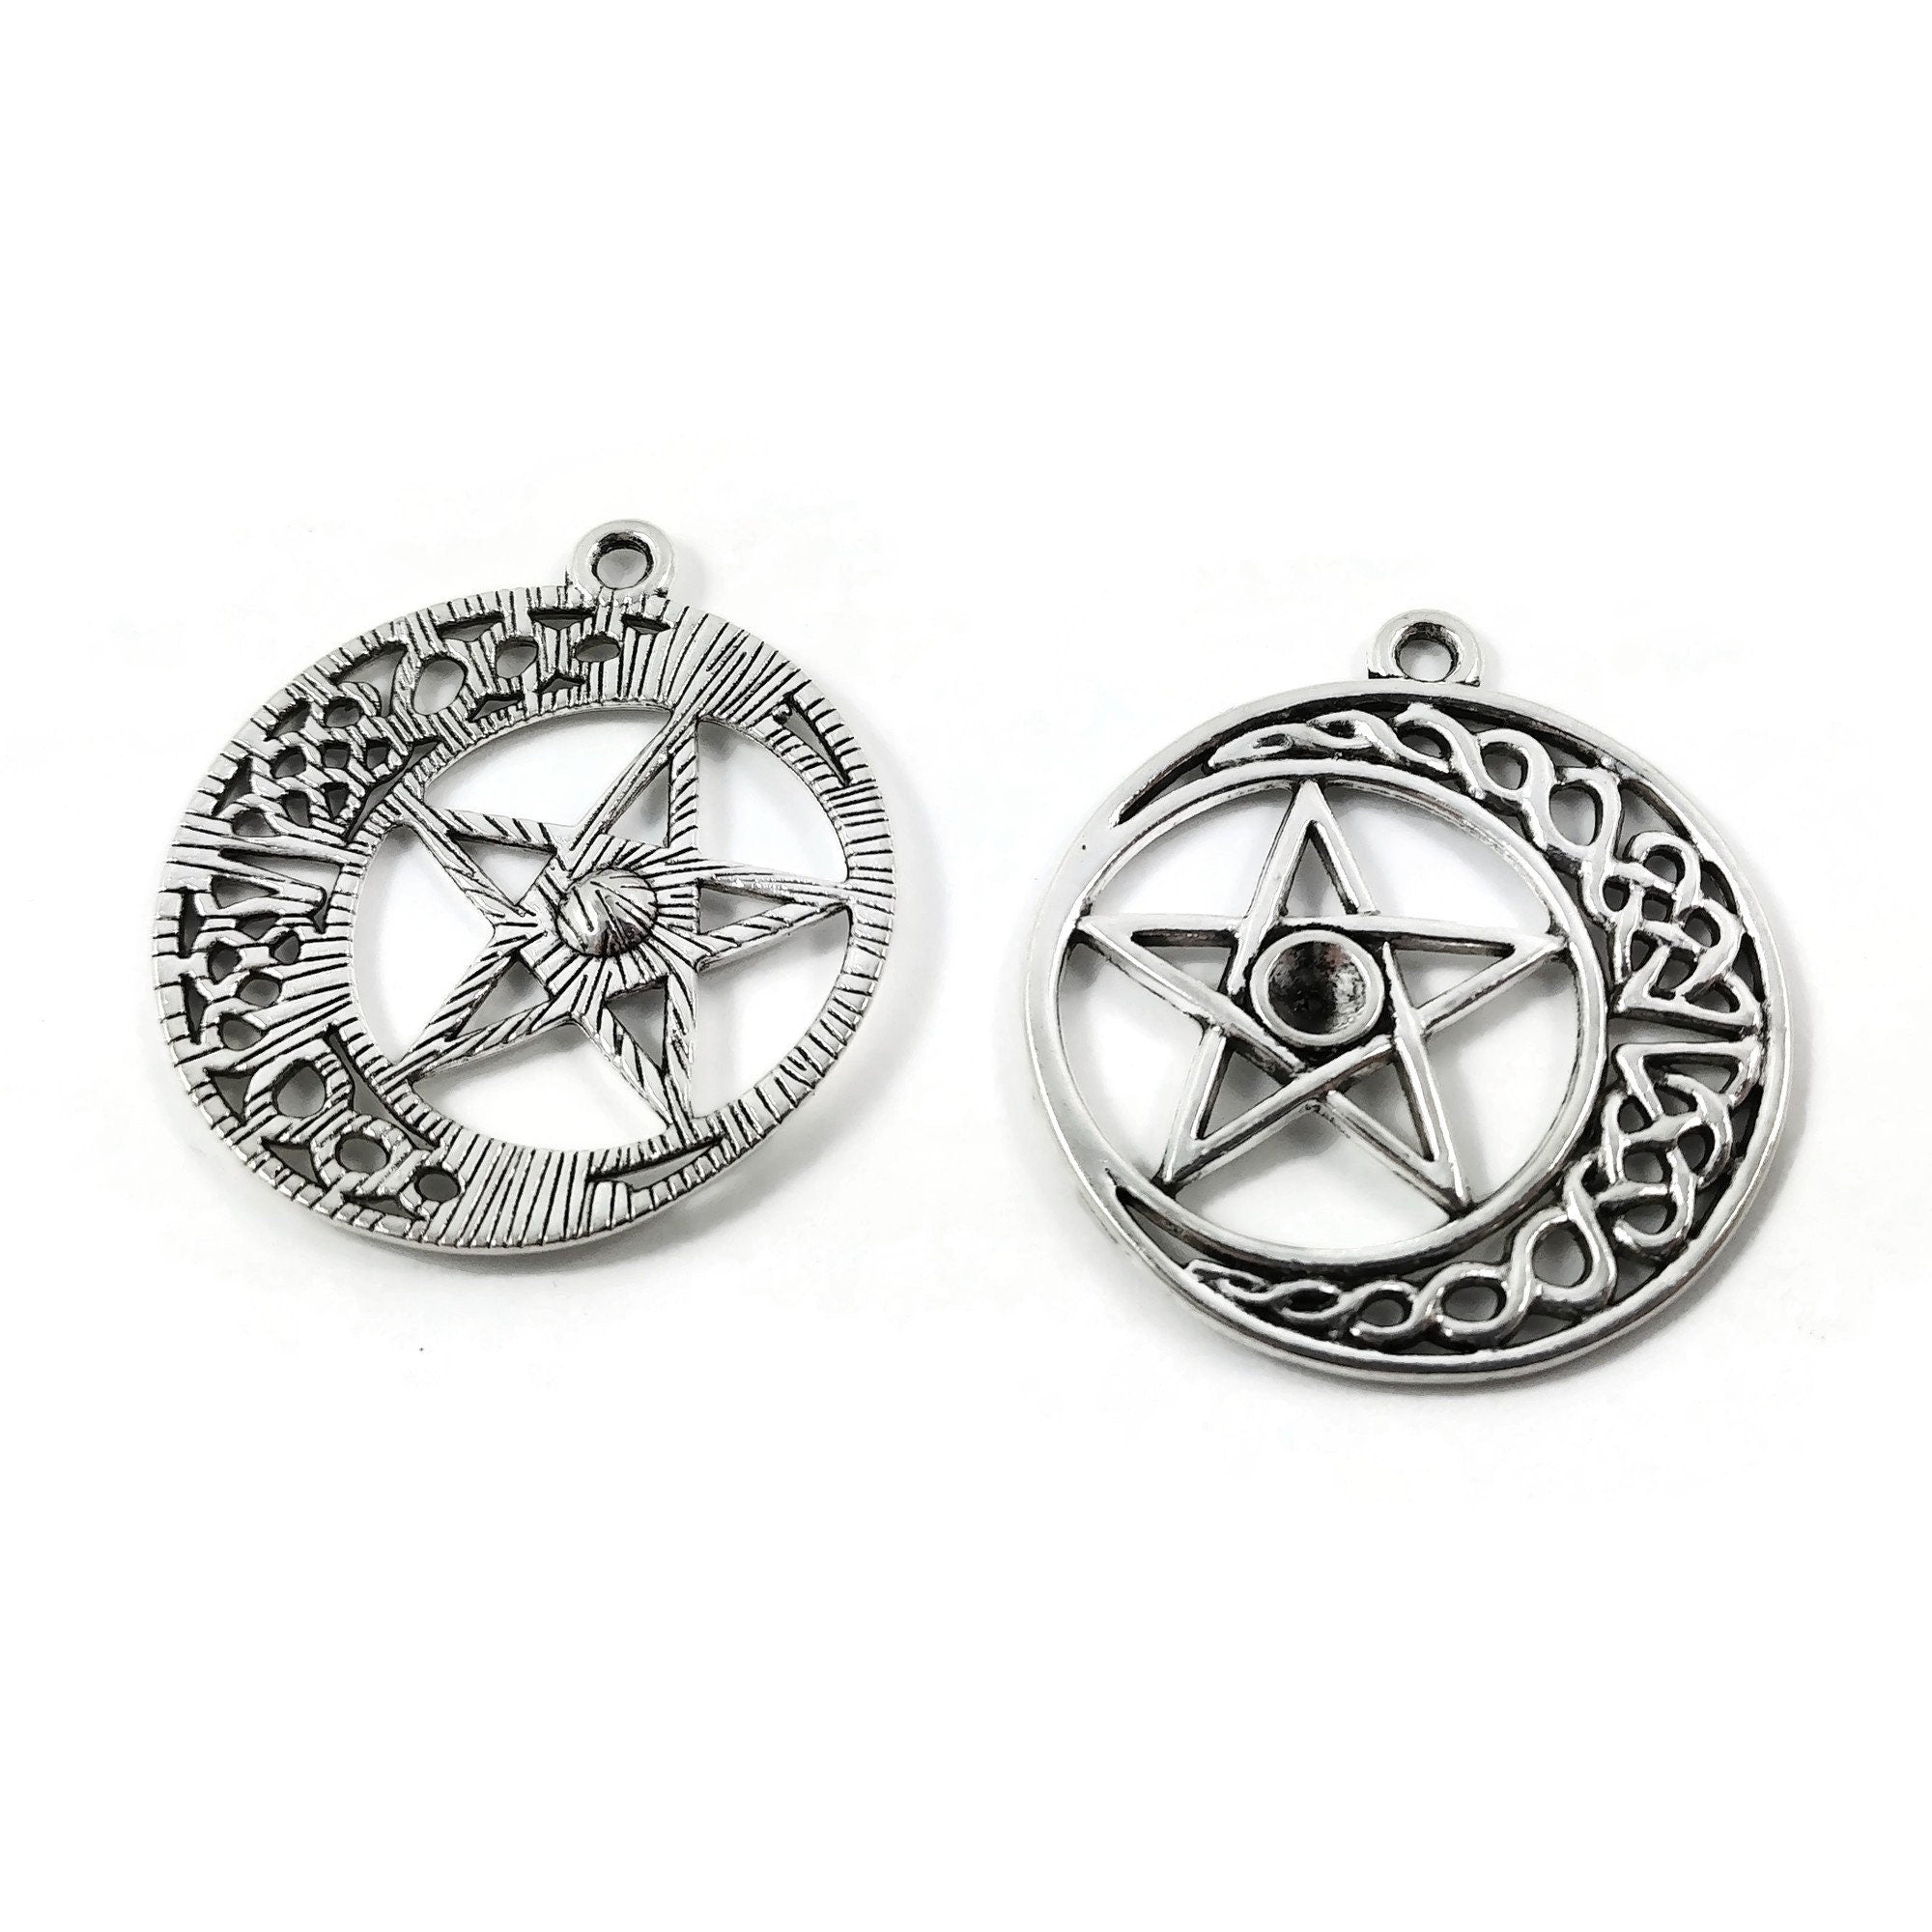 5 Celtic knot pentagram charms, Rhinestone setting, Antique silver metal pendants, Jewelry making supplies